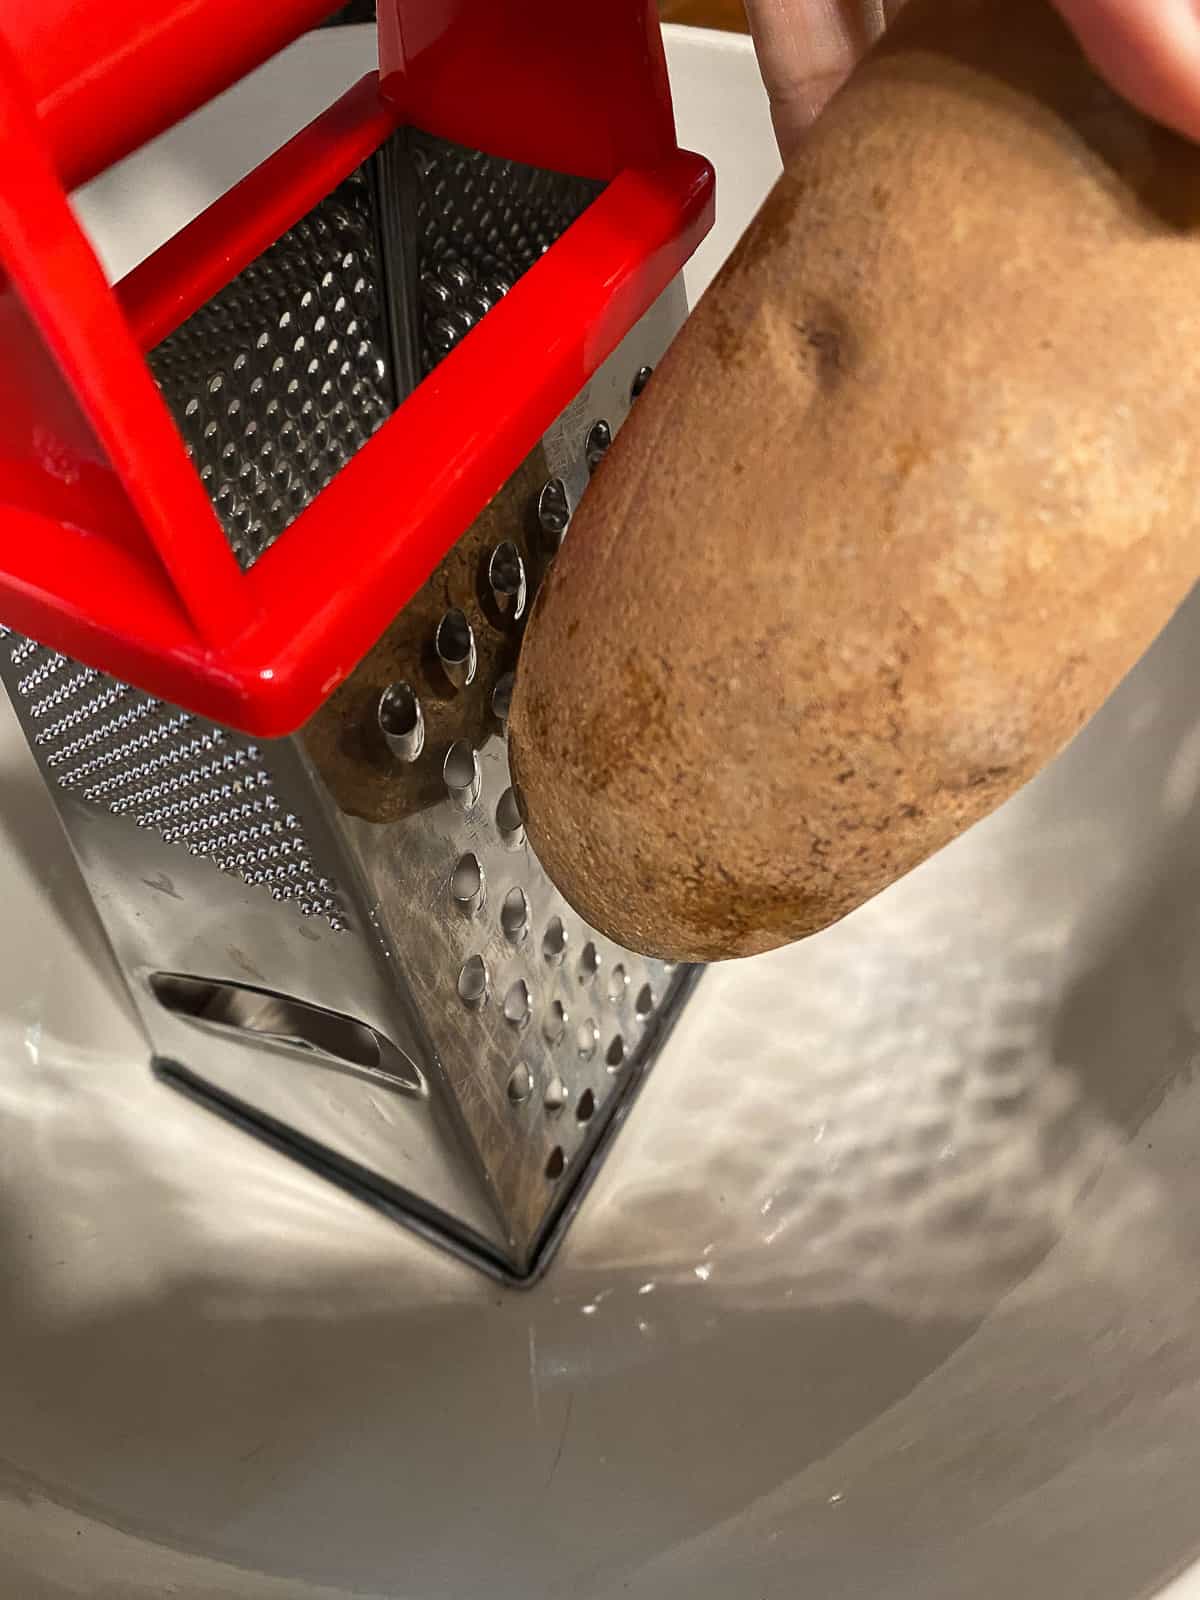 process shot of grating potato